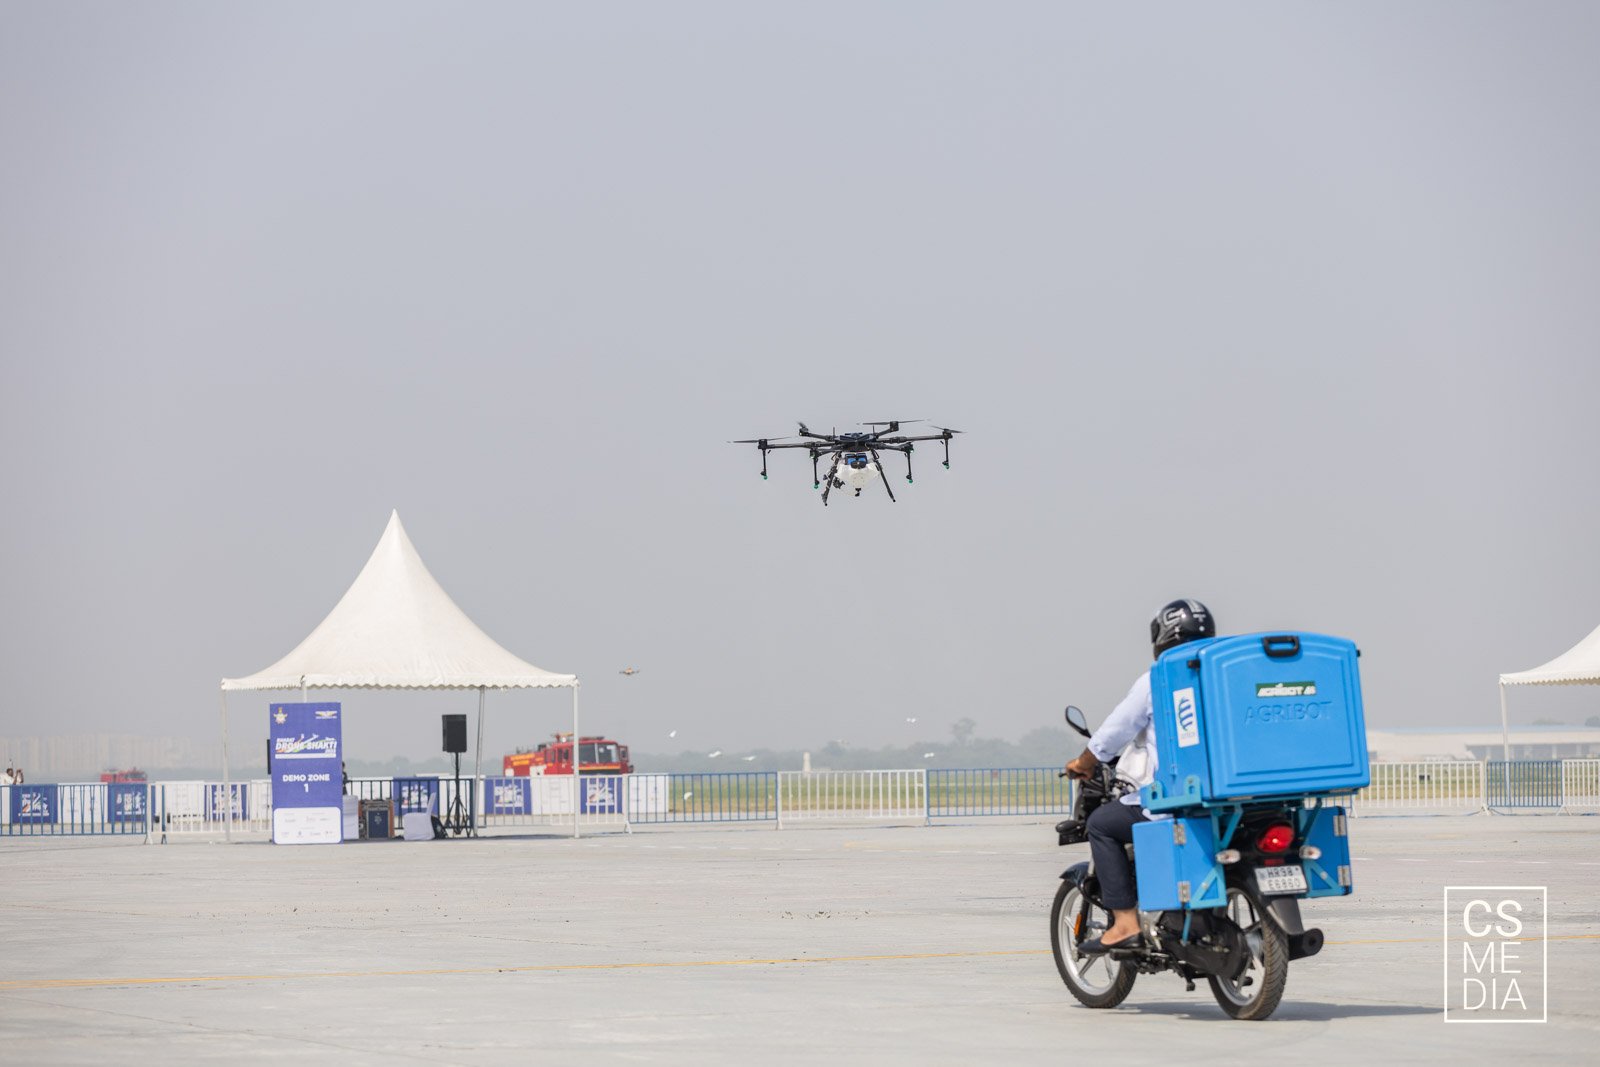 Top Corporate Photographers Delhi Indian Airforce Photography Drone Exhibition Photography 41